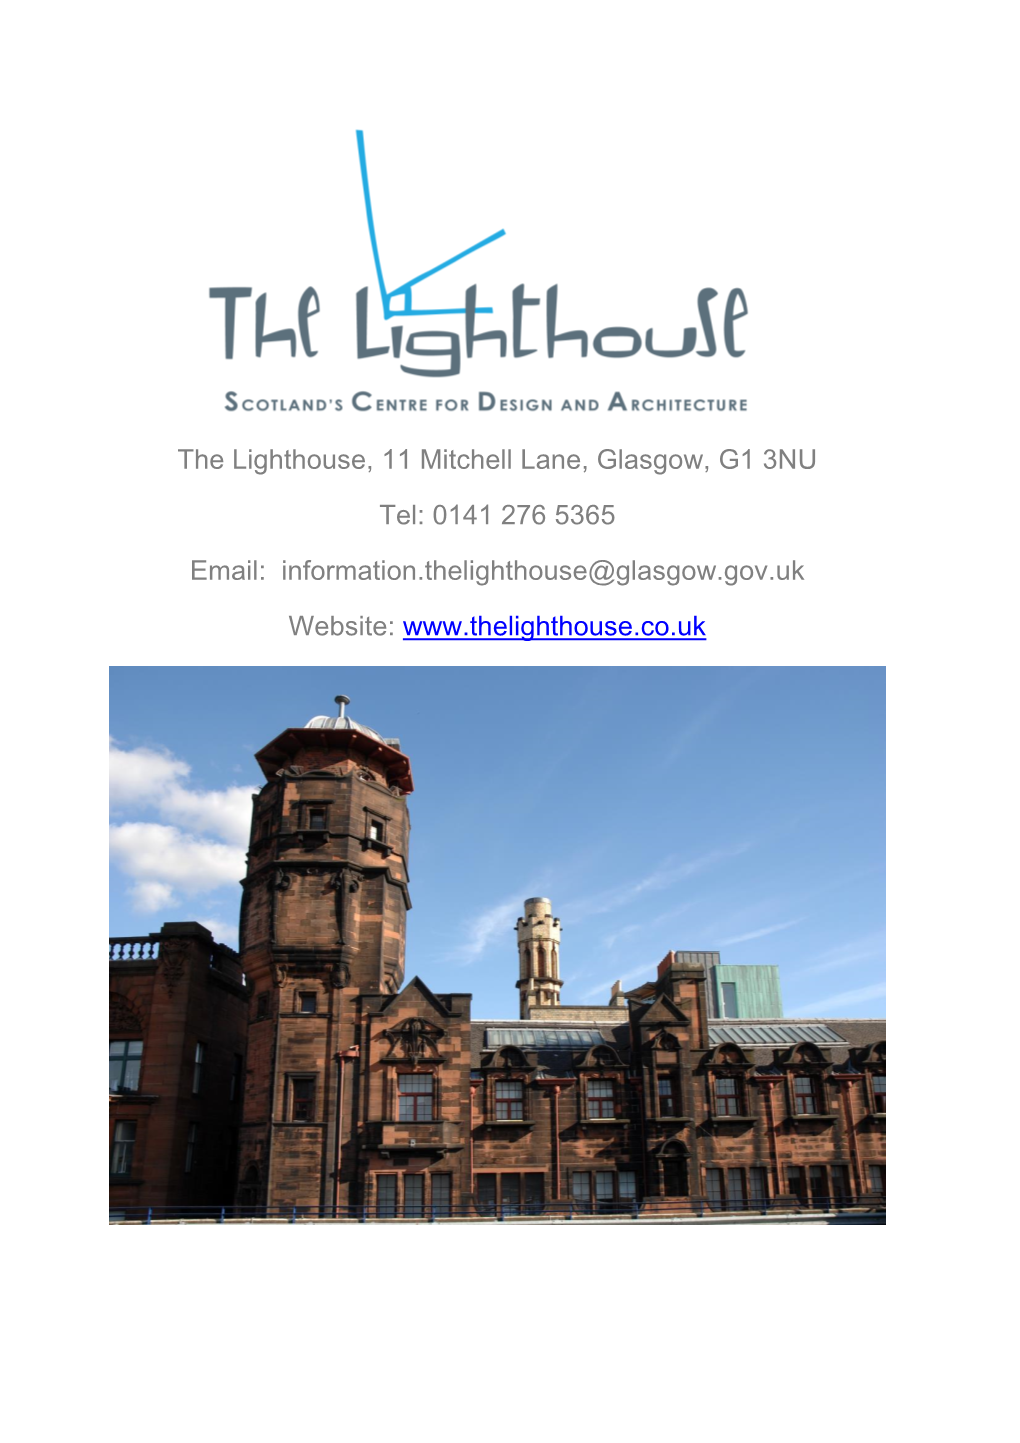 The Lighthouse, 11 Mitchell Lane, Glasgow, G1 3NU Tel: 0141 276